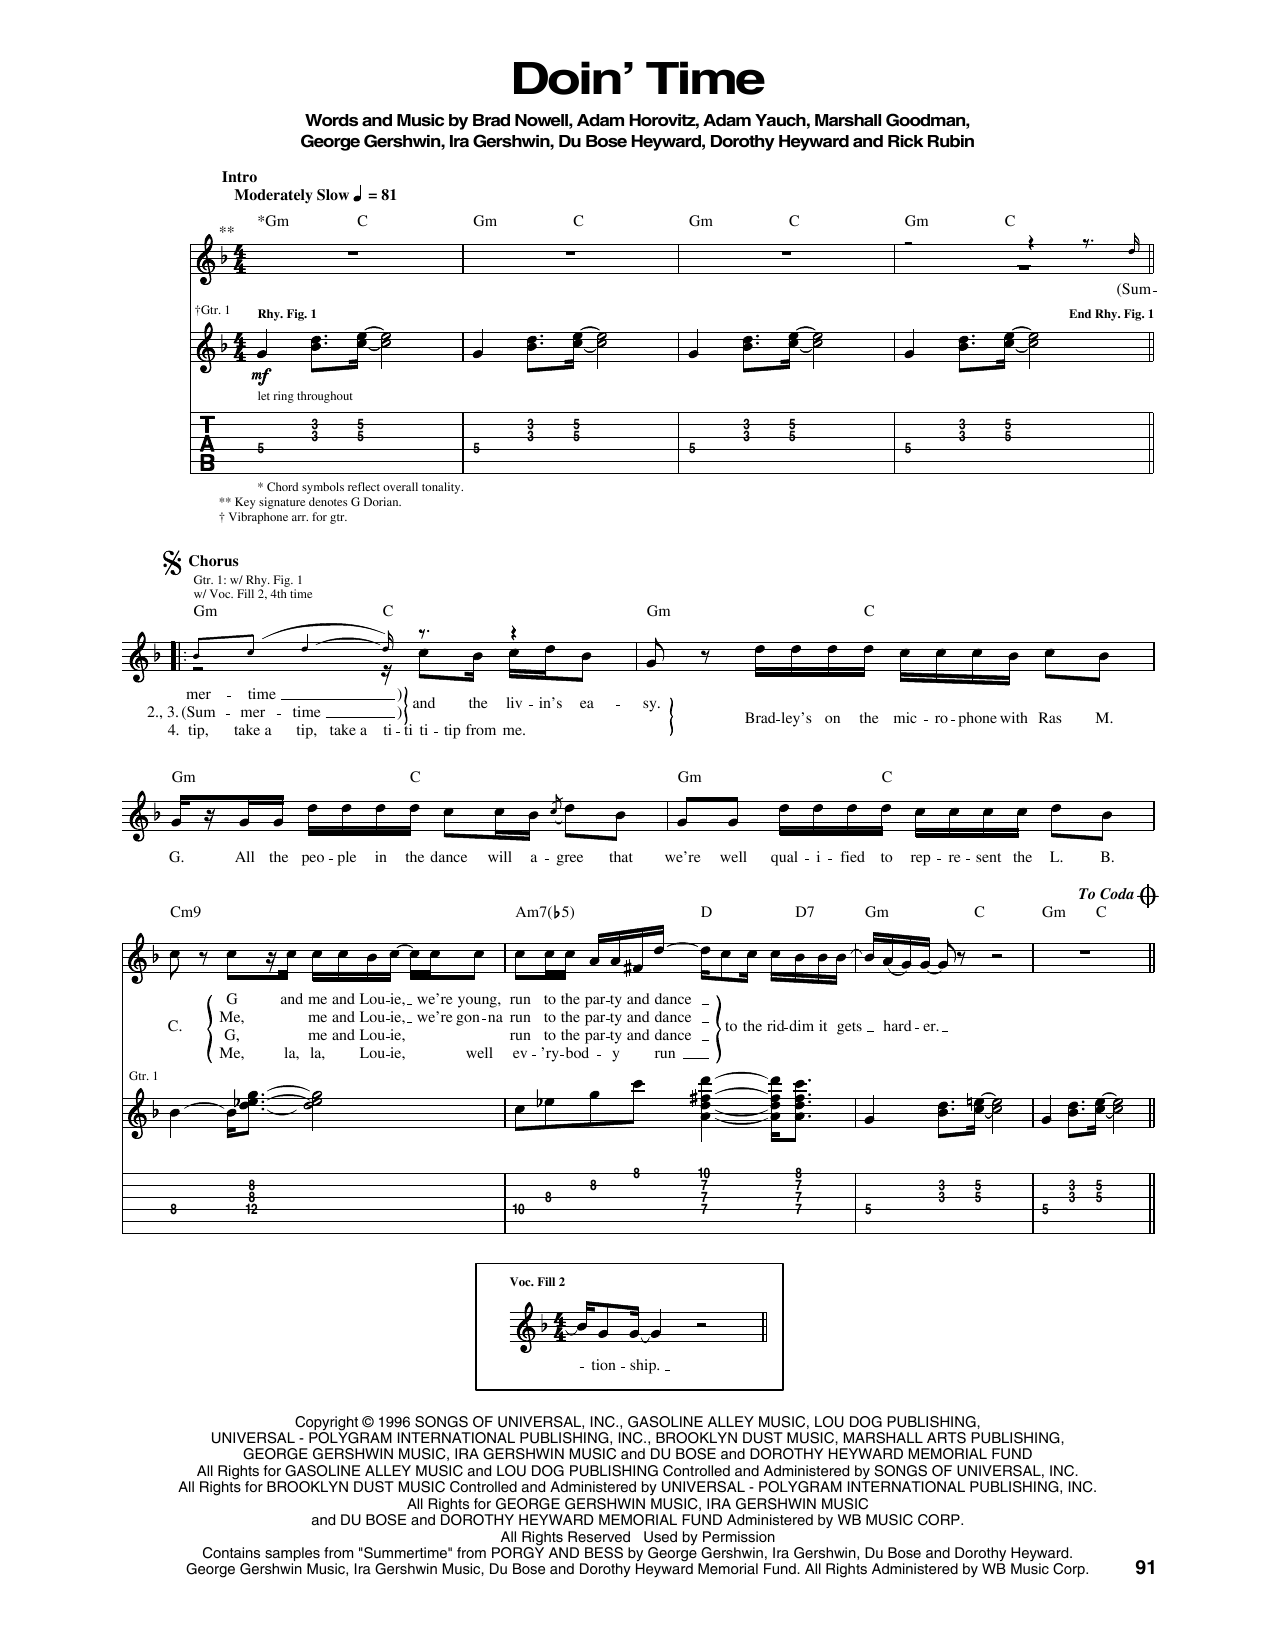 Sublime Doin' Time sheet music notes and chords arranged for Ukulele